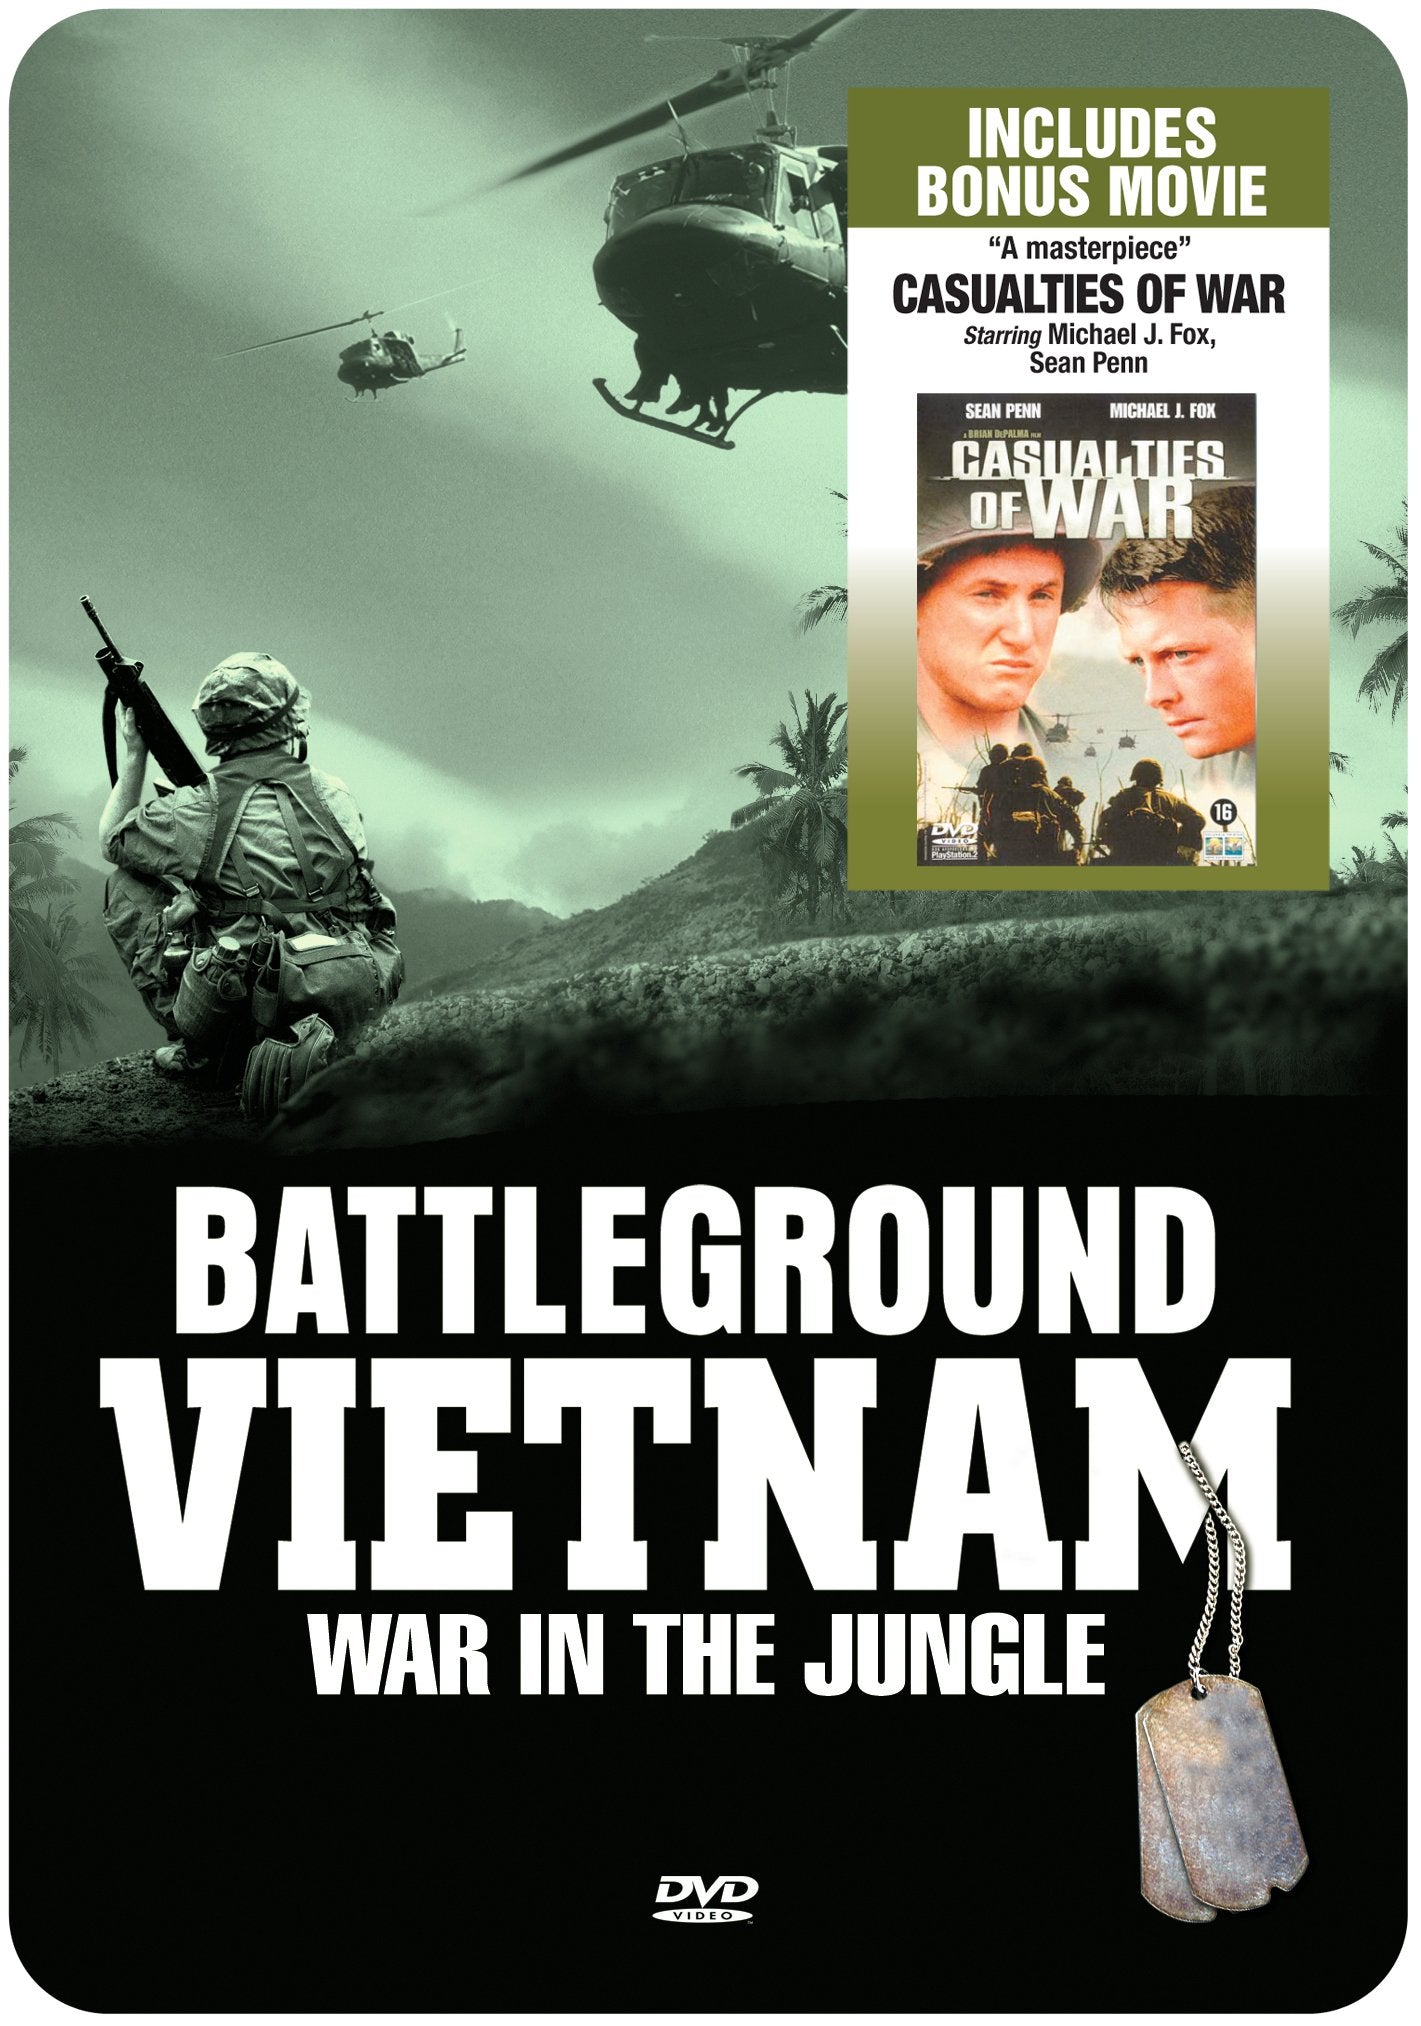 Battleground Vietnam: War in the Jungle/Casualties of War